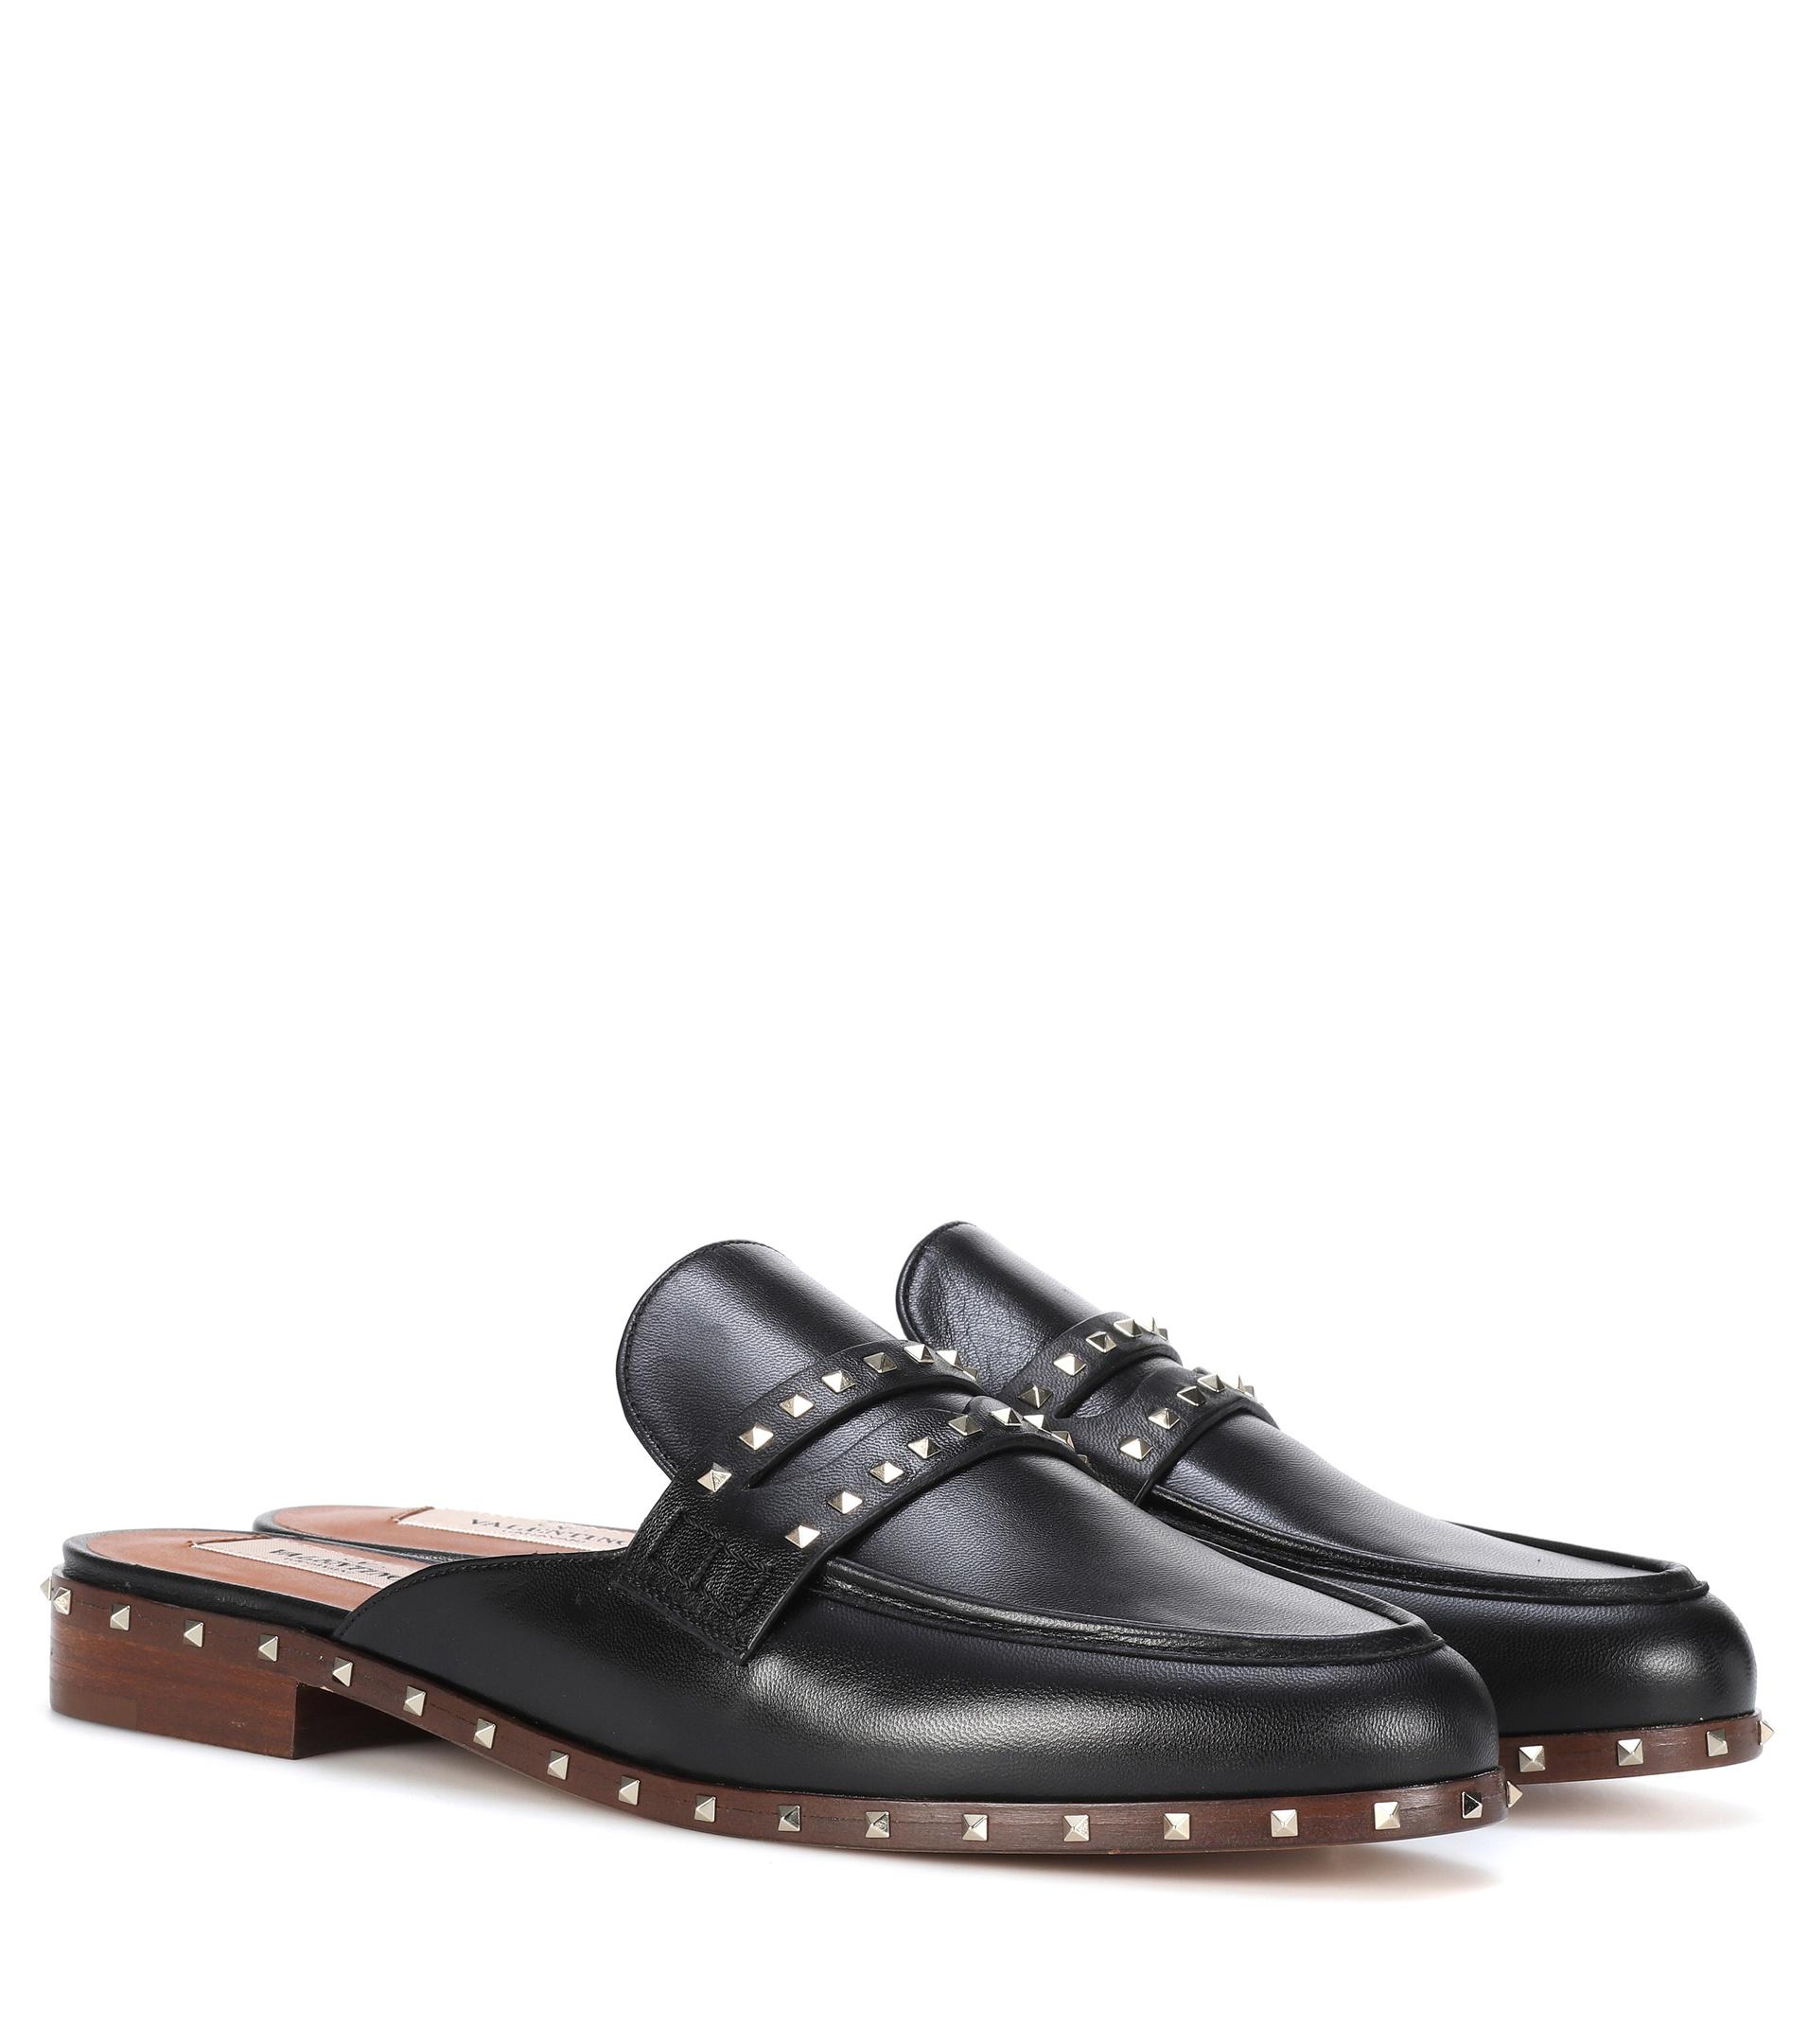 Lyst - Valentino Garavani Leather Slippers in Black